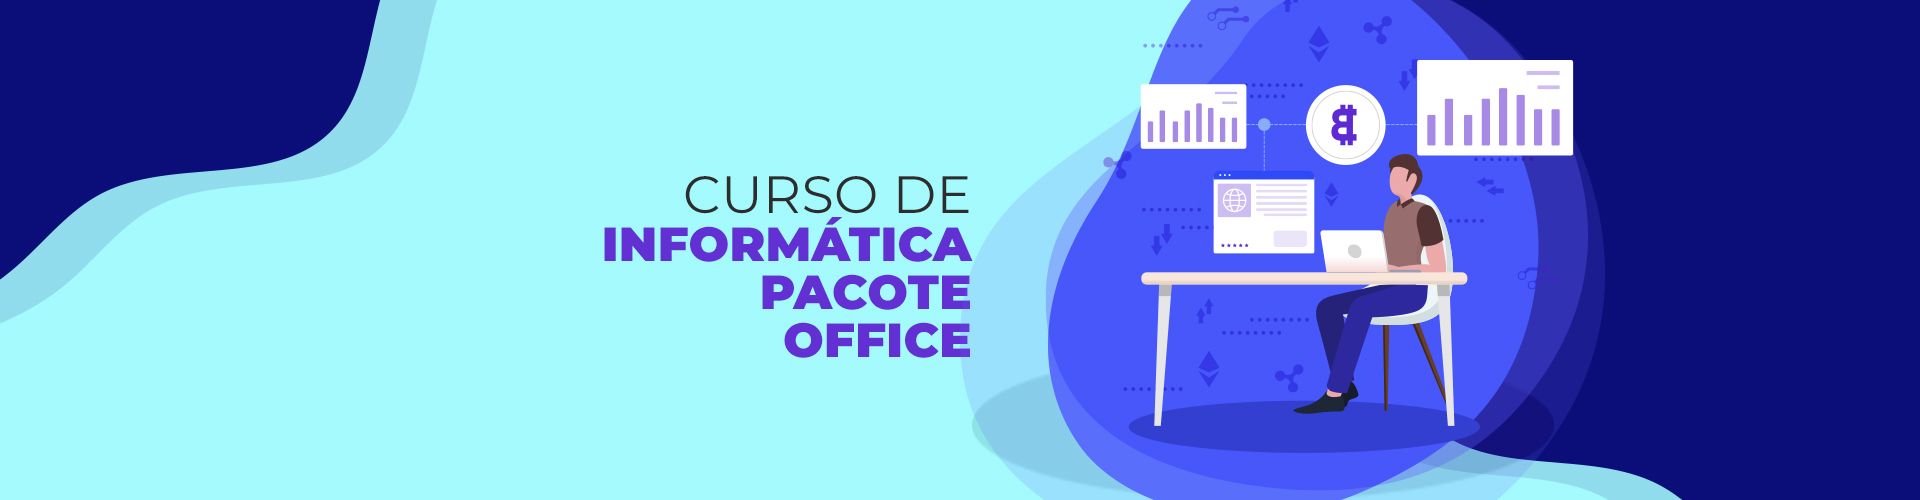 Curso de Informática Pacote Office - Escola Cursos Maringá